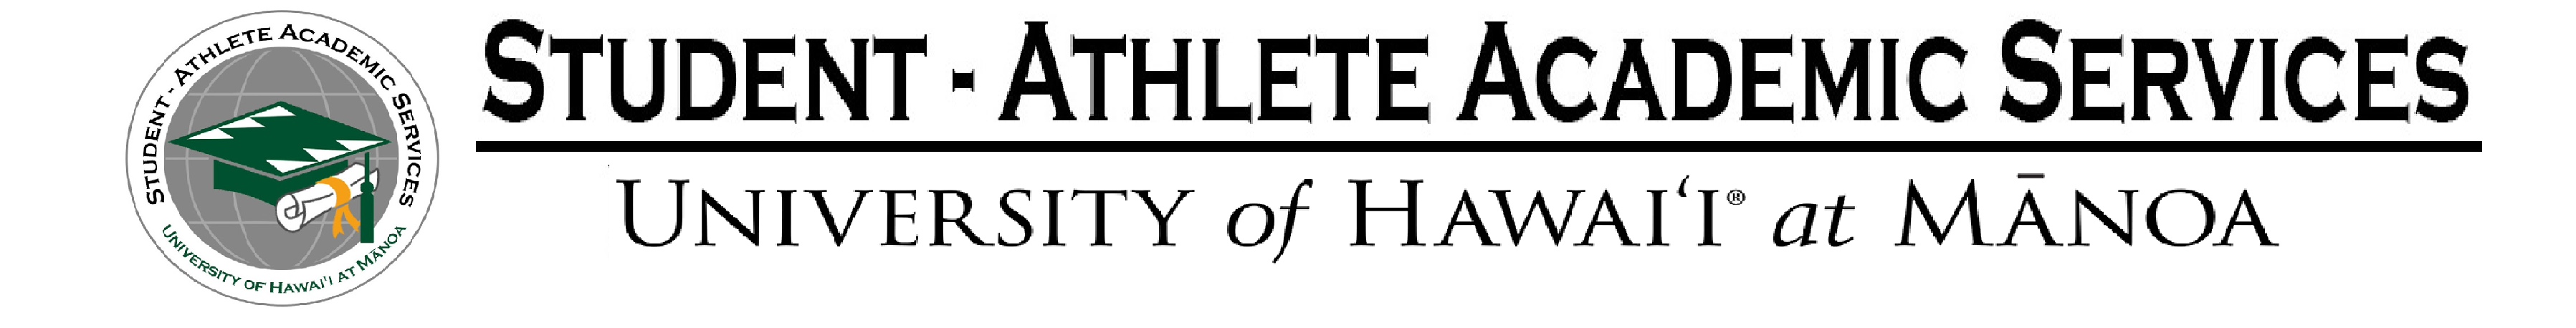 Student-Athlete Academic Services